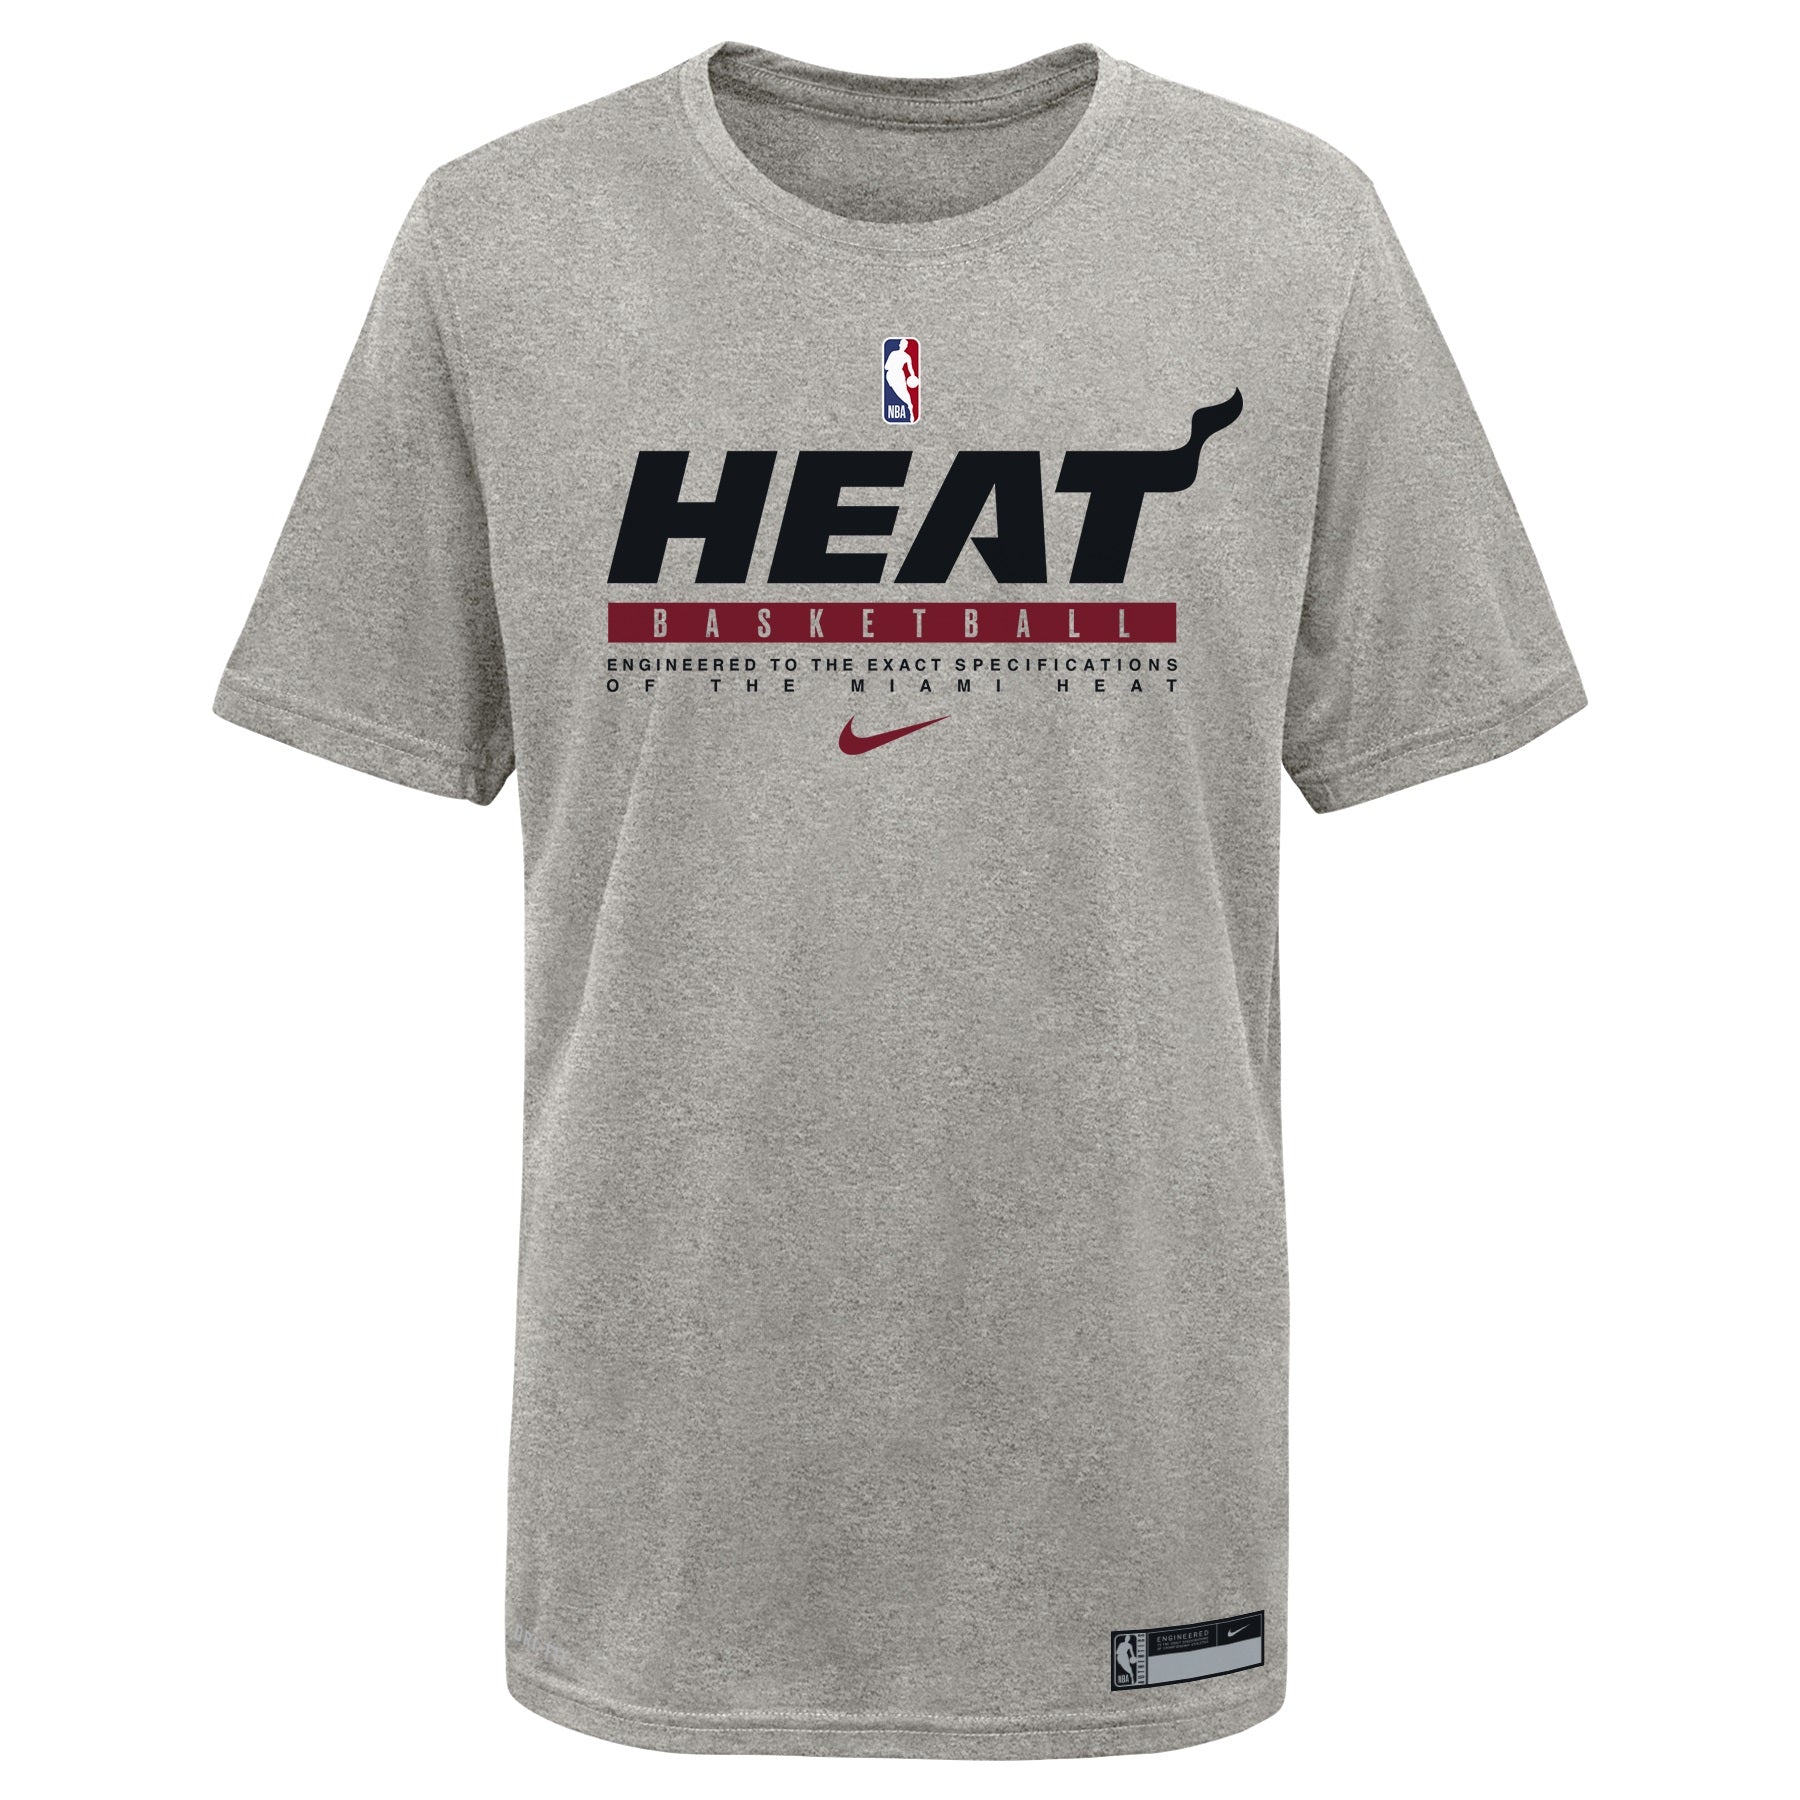 miami heat basketball t shirt